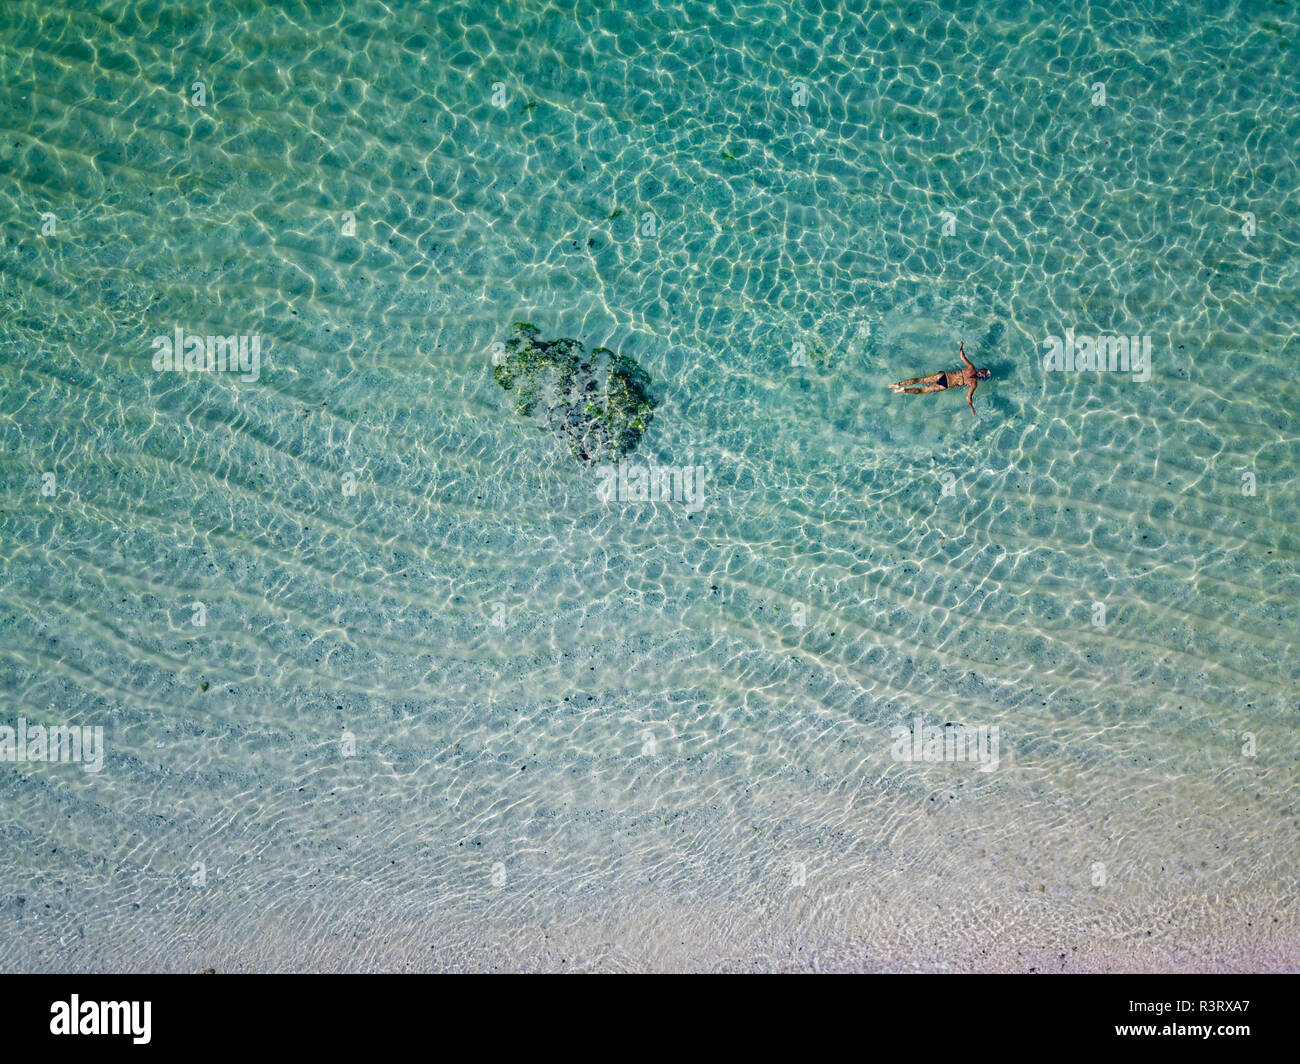 Indonesia, Bali, Melasti, Aerial view of Karma Kandara beach, man swimming Stock Photo